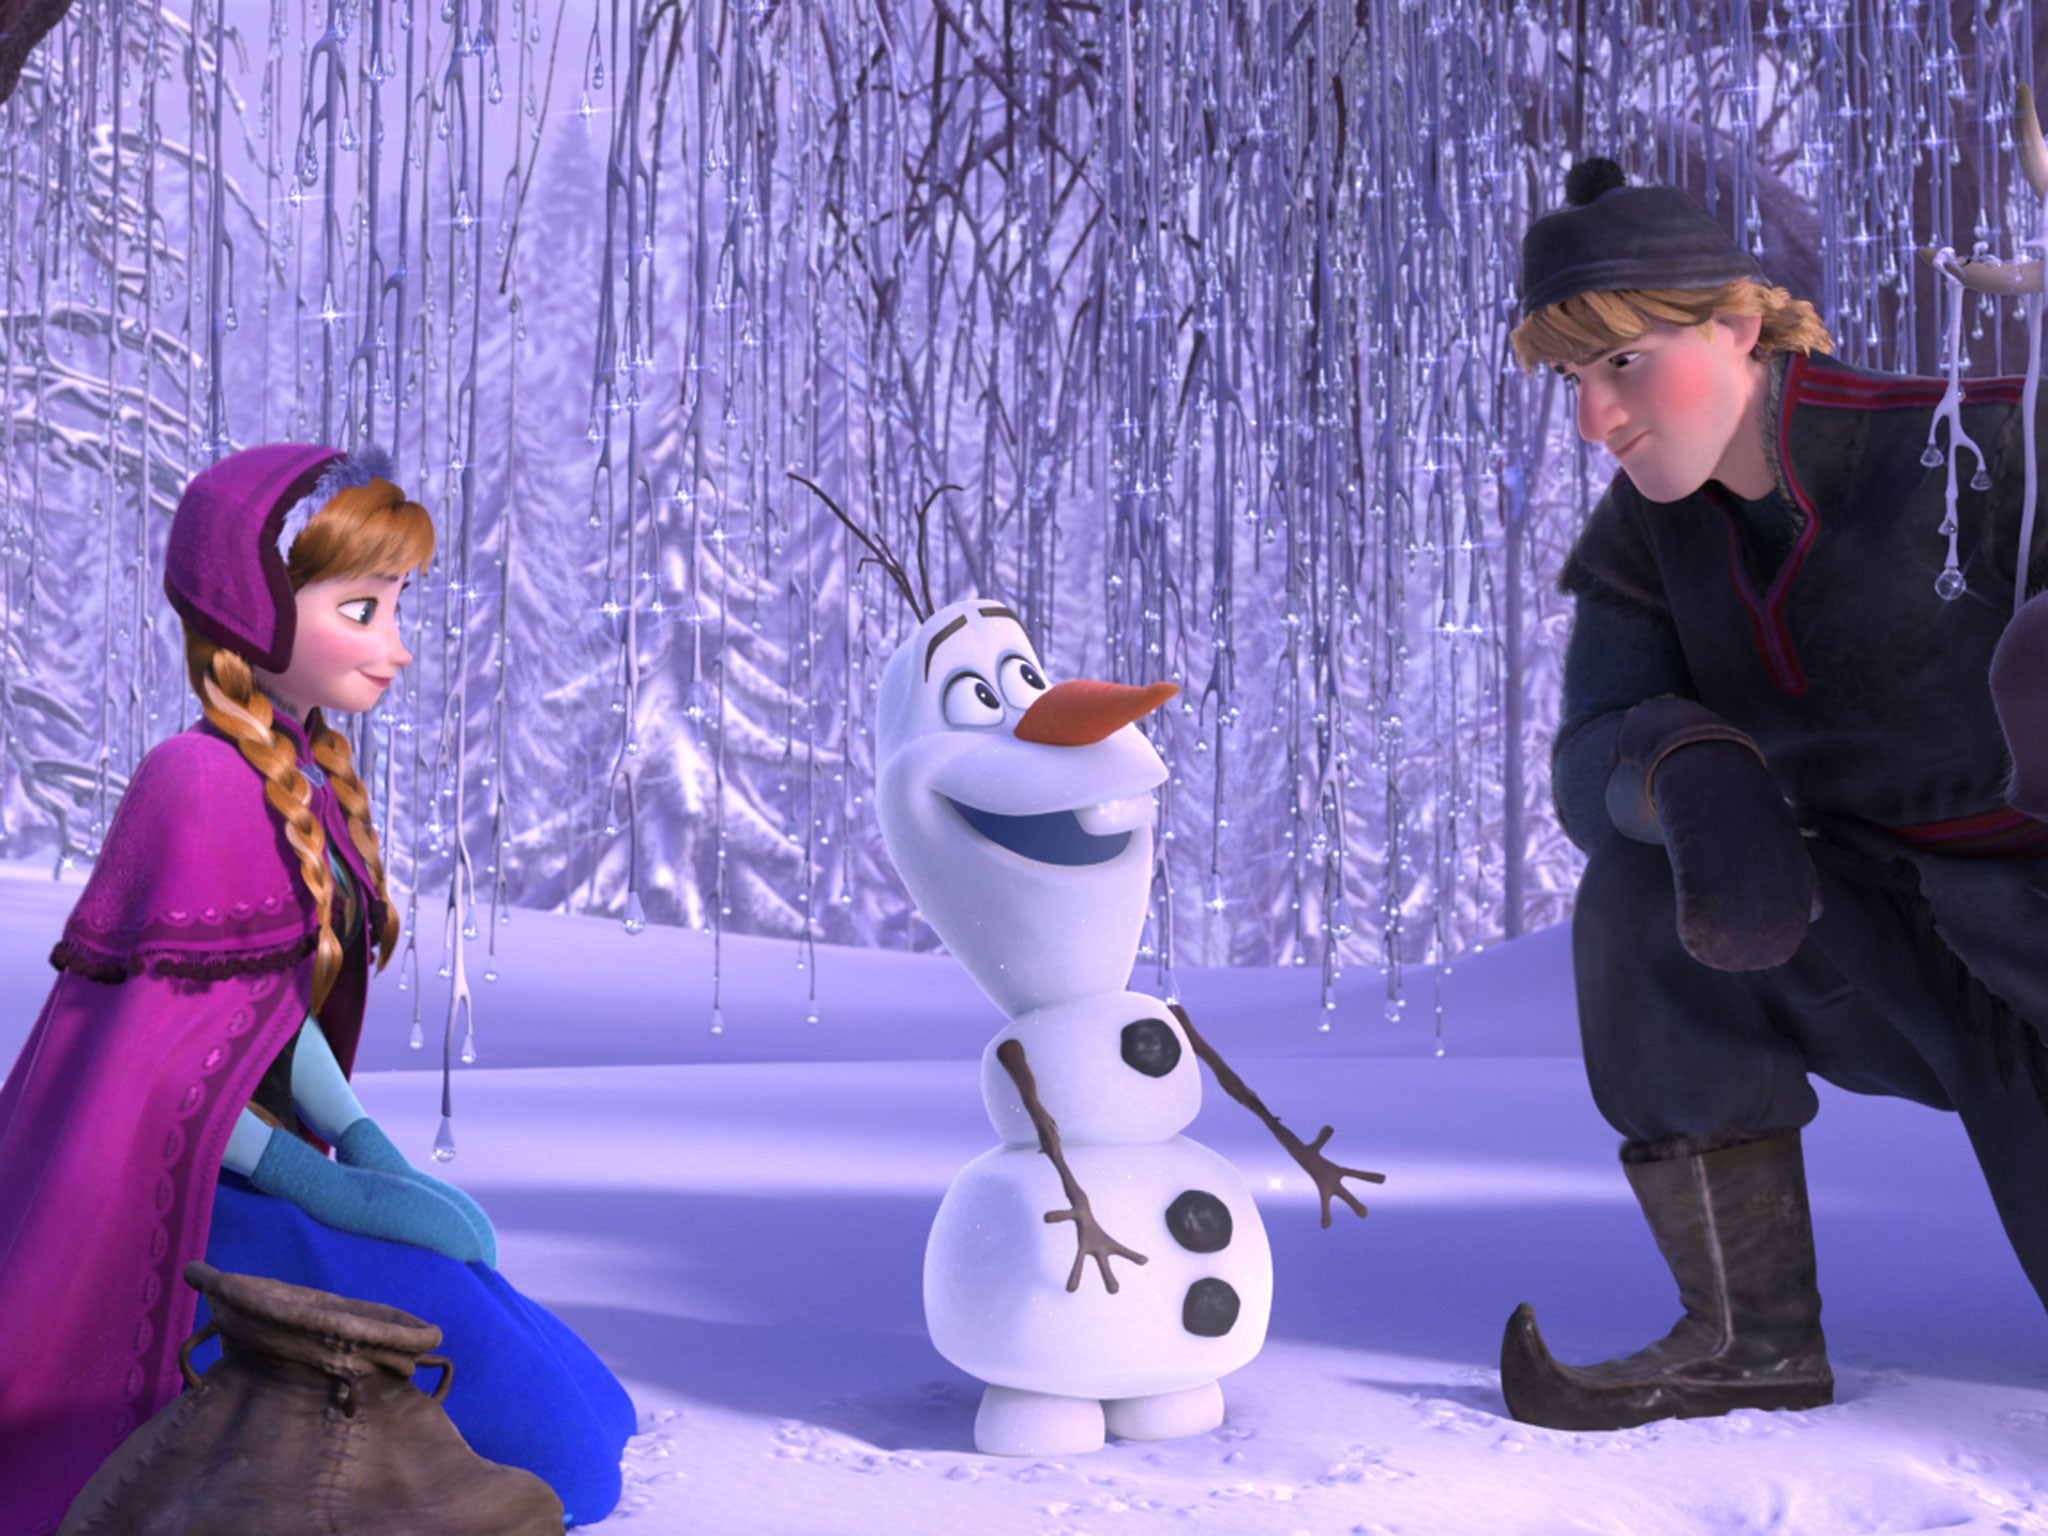 A still from the Disney film Frozen